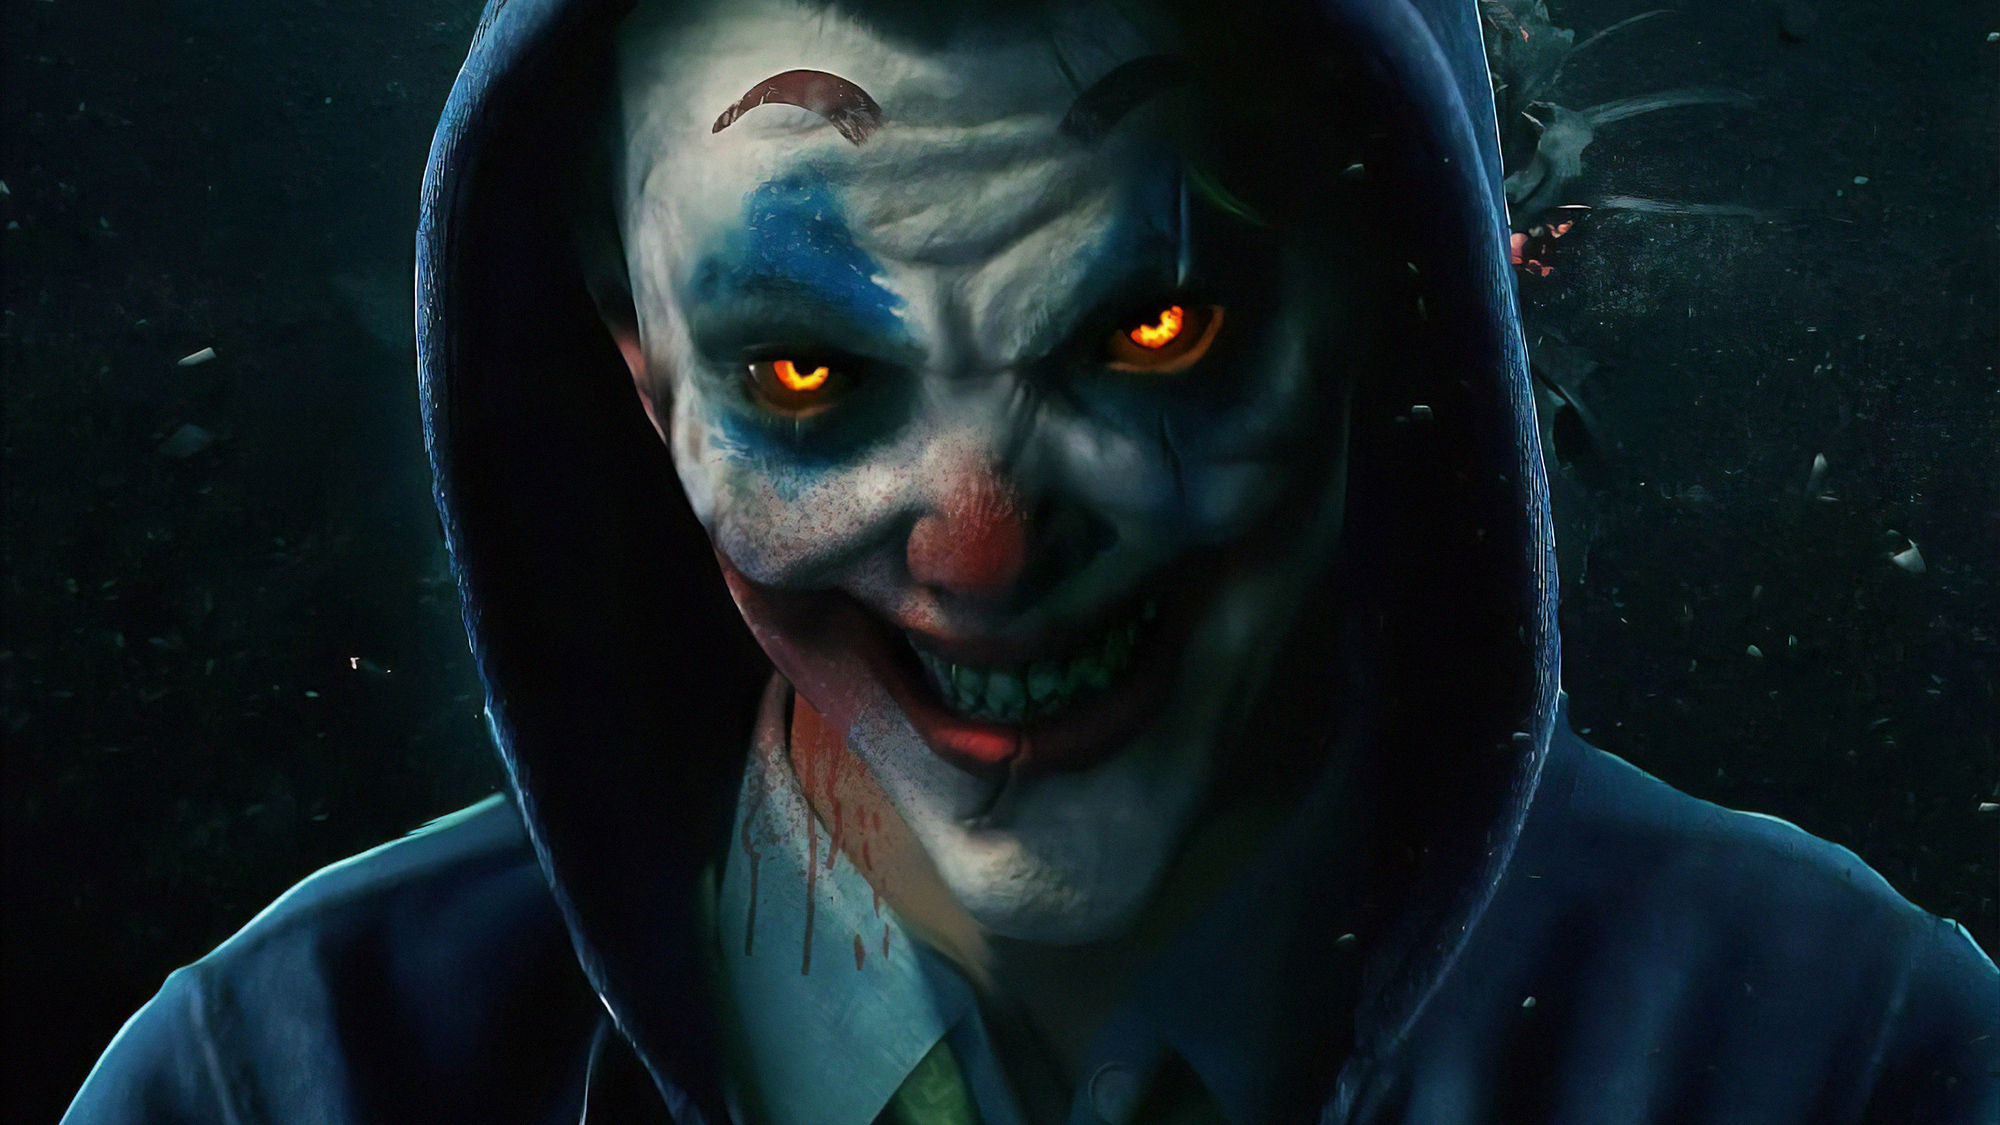 Devil Joker, HD Superheroes, 4k Wallpaper, Image, Background, Photo and Picture